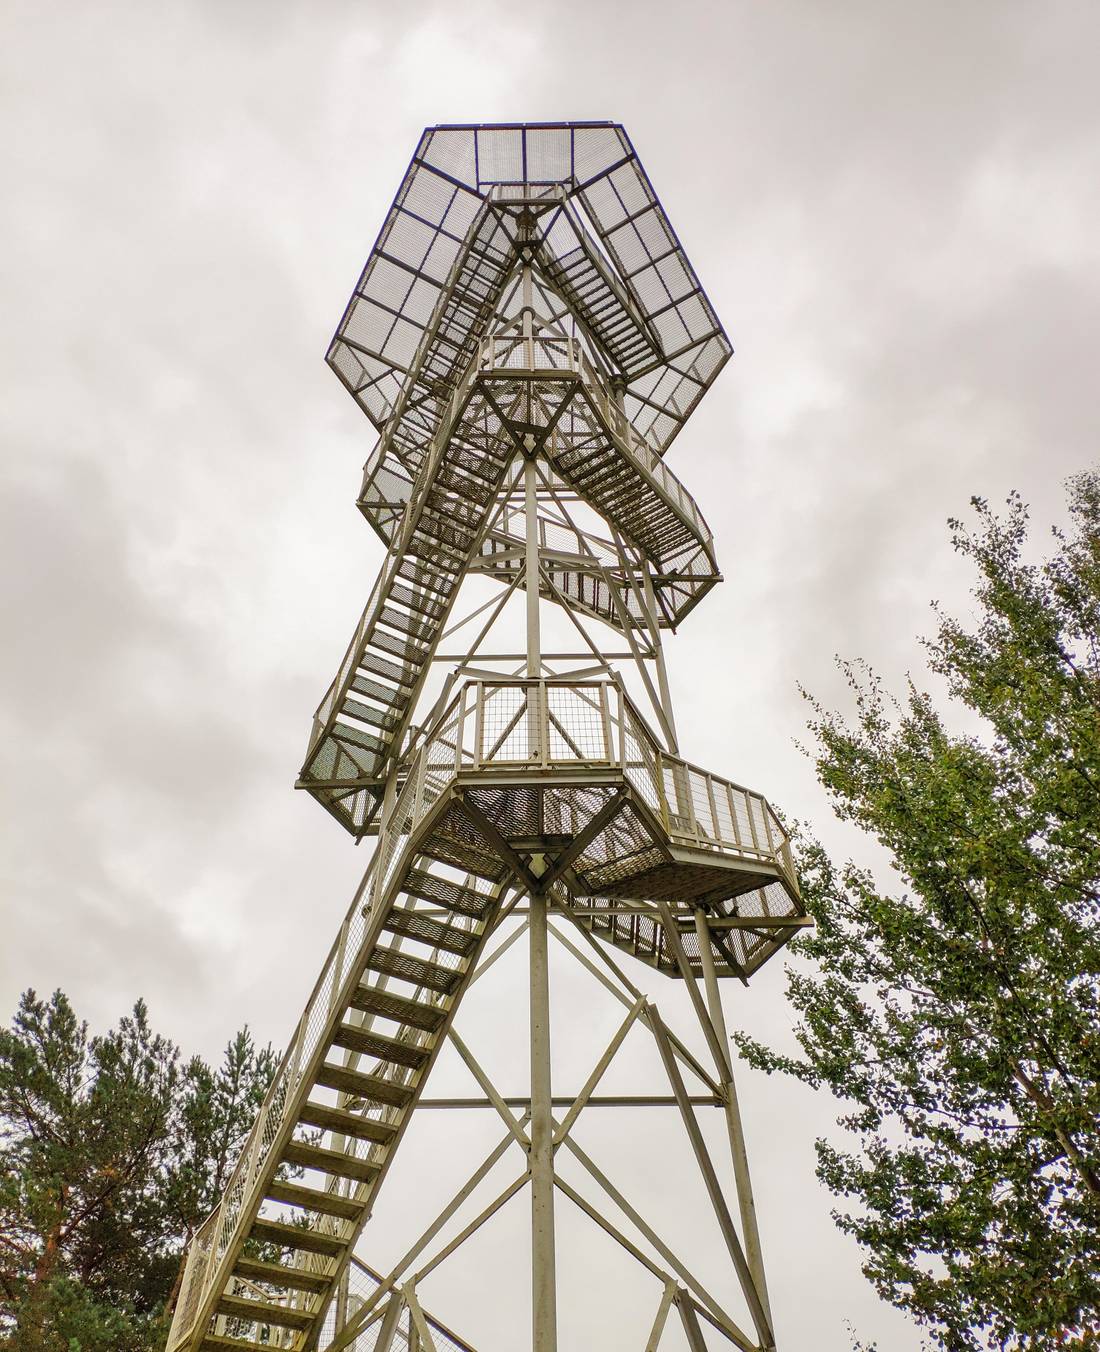 Vilkakalnis (Ignalina) observation tower. Photo by Wander Spot Explore ©